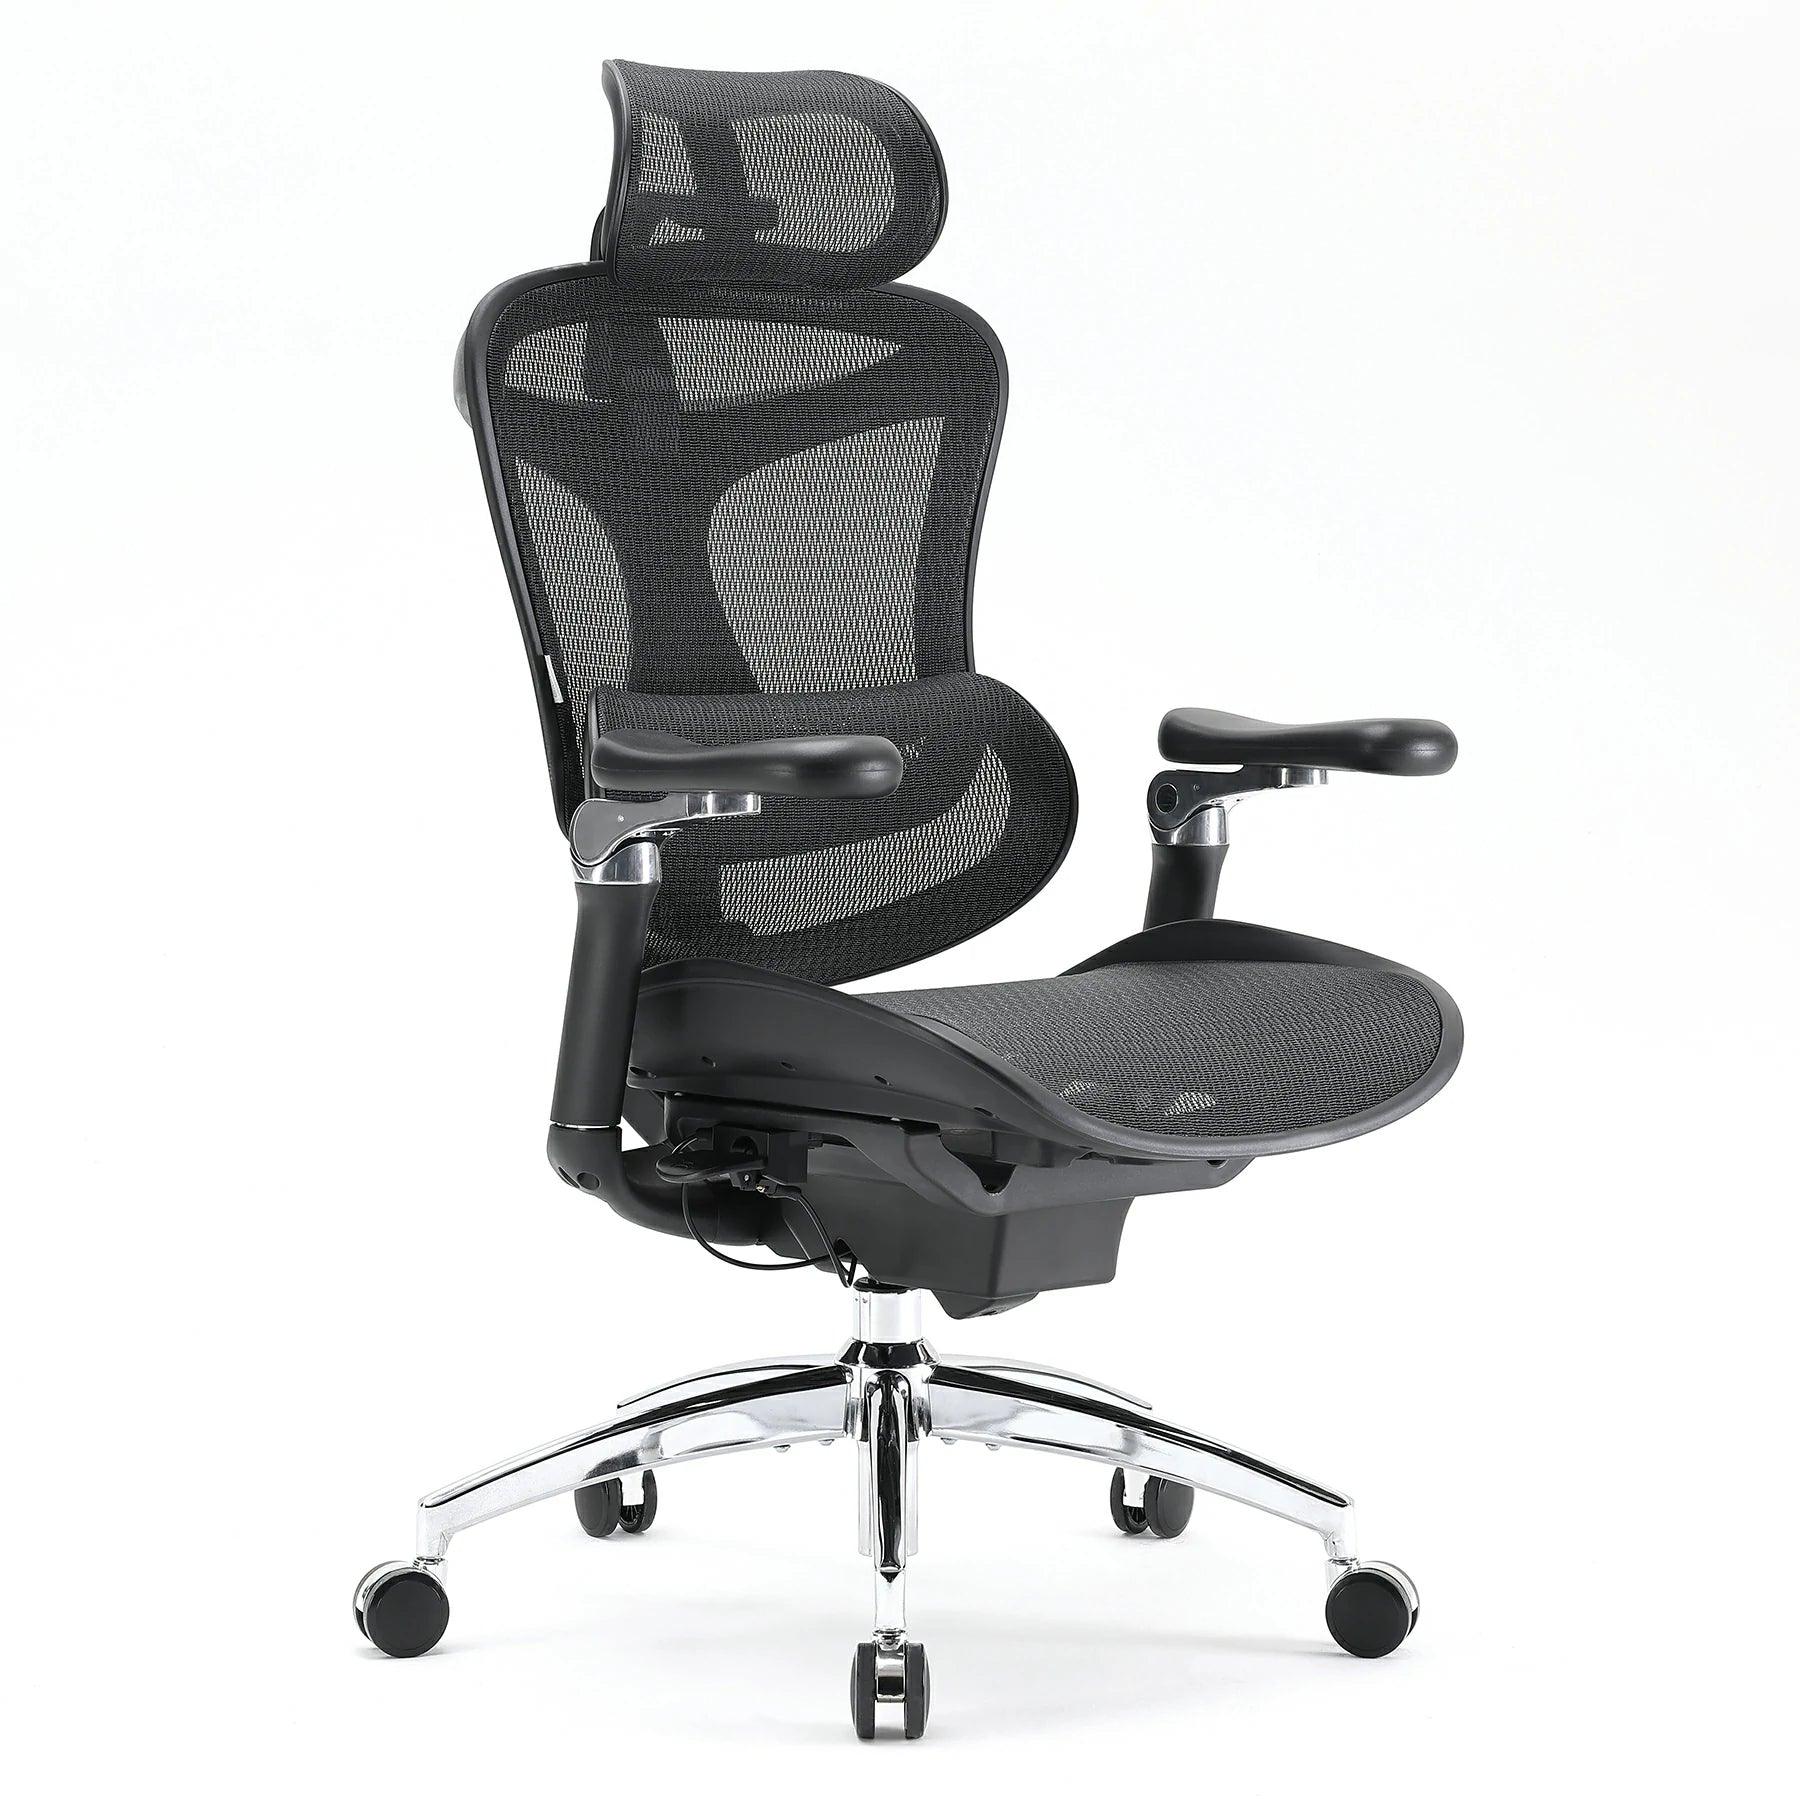 Sihoo M57 office full mesh boss swivel chair - AliExpress